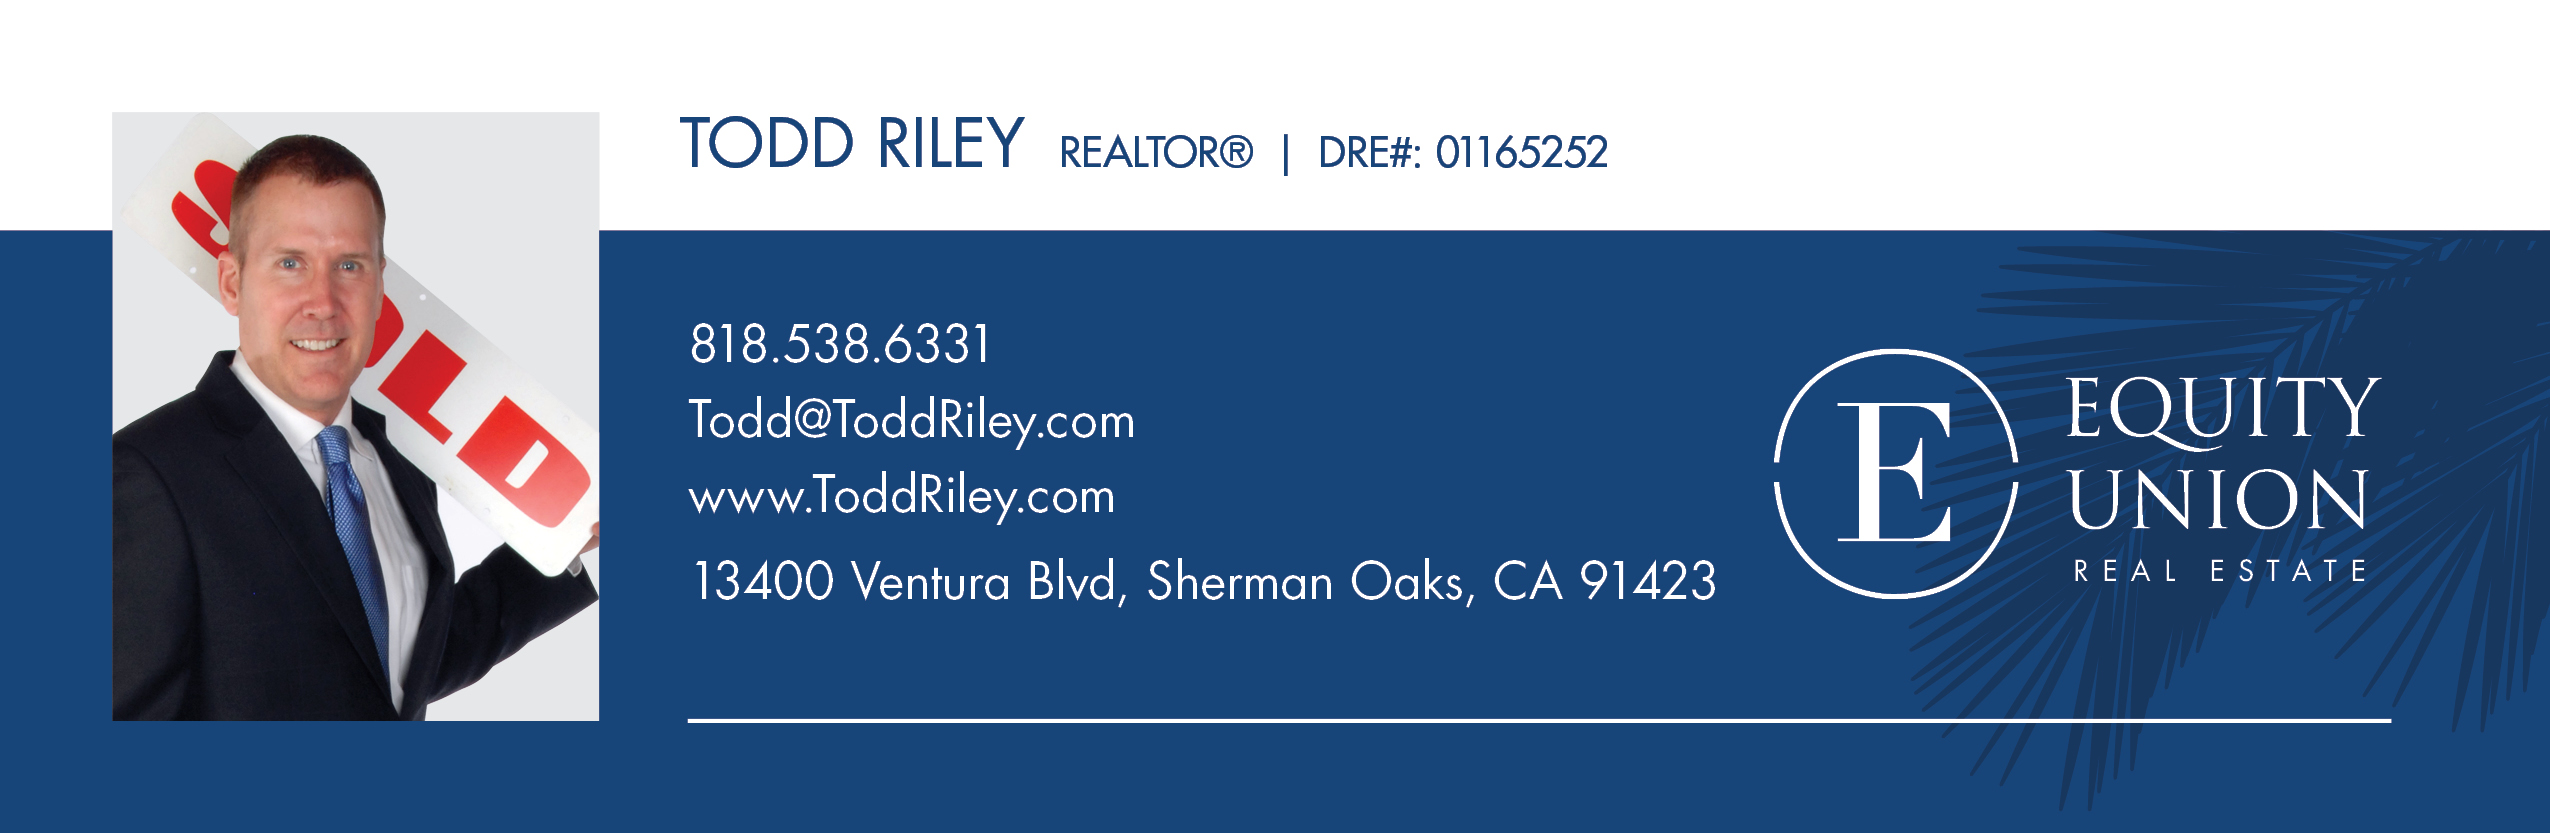 Todd Riley Real Estate